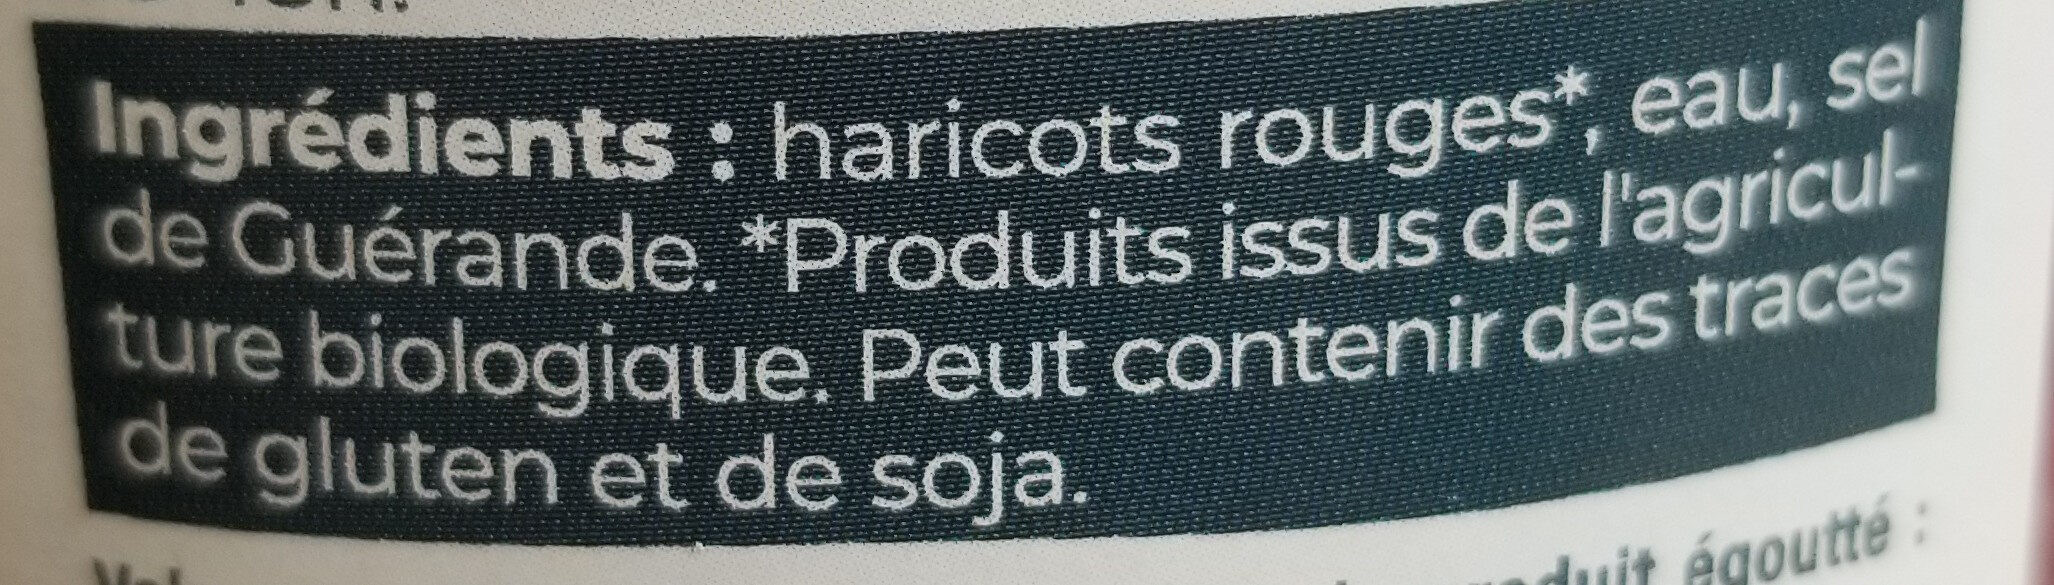 Haricots Rouges France Bio - Ingrediënten - fr